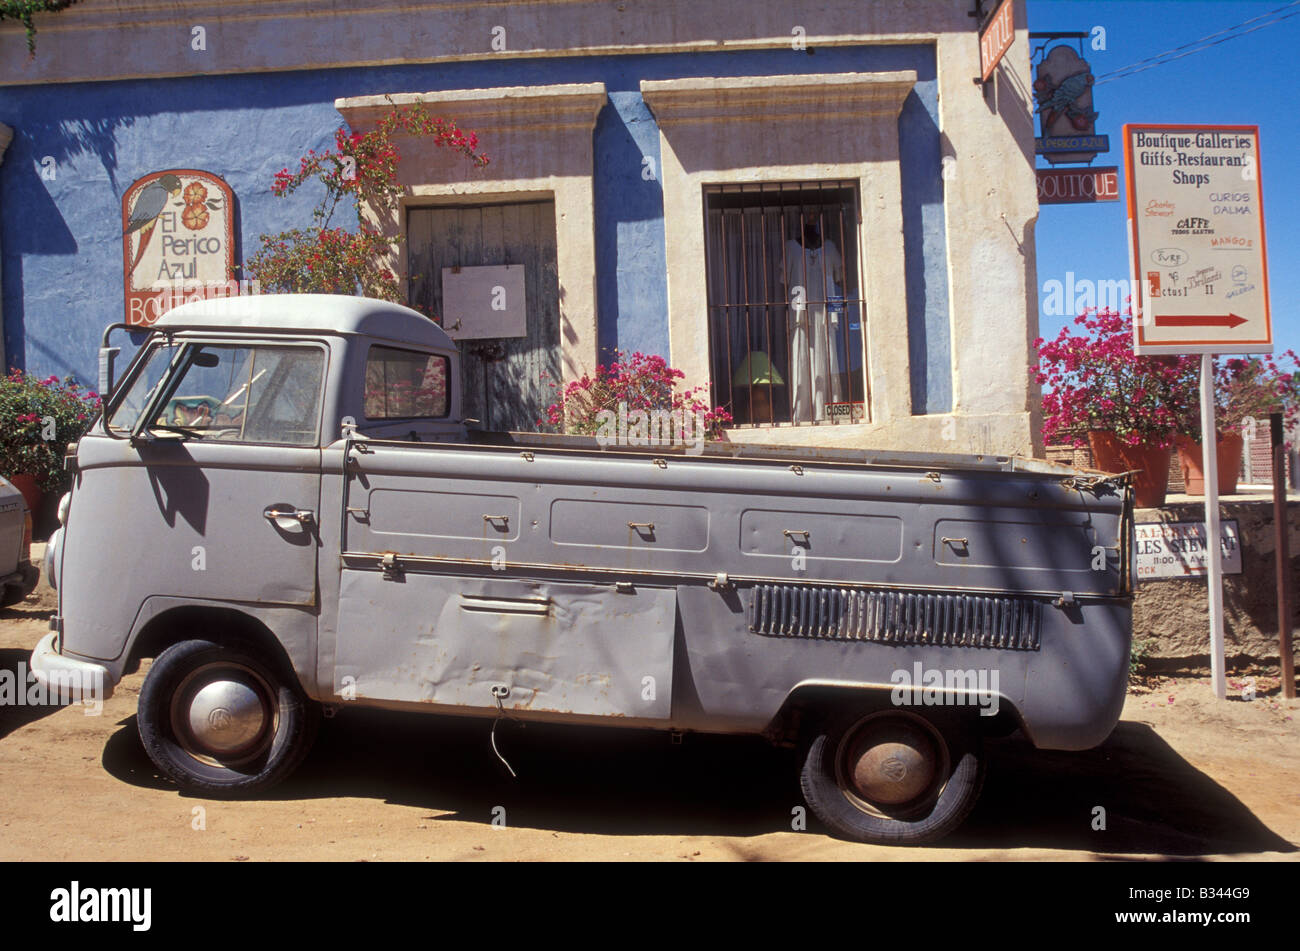 Vintage 1960's era Volkswagon pickup truck in Todos Santos, Baja California Sur, Mexico Stock Photo